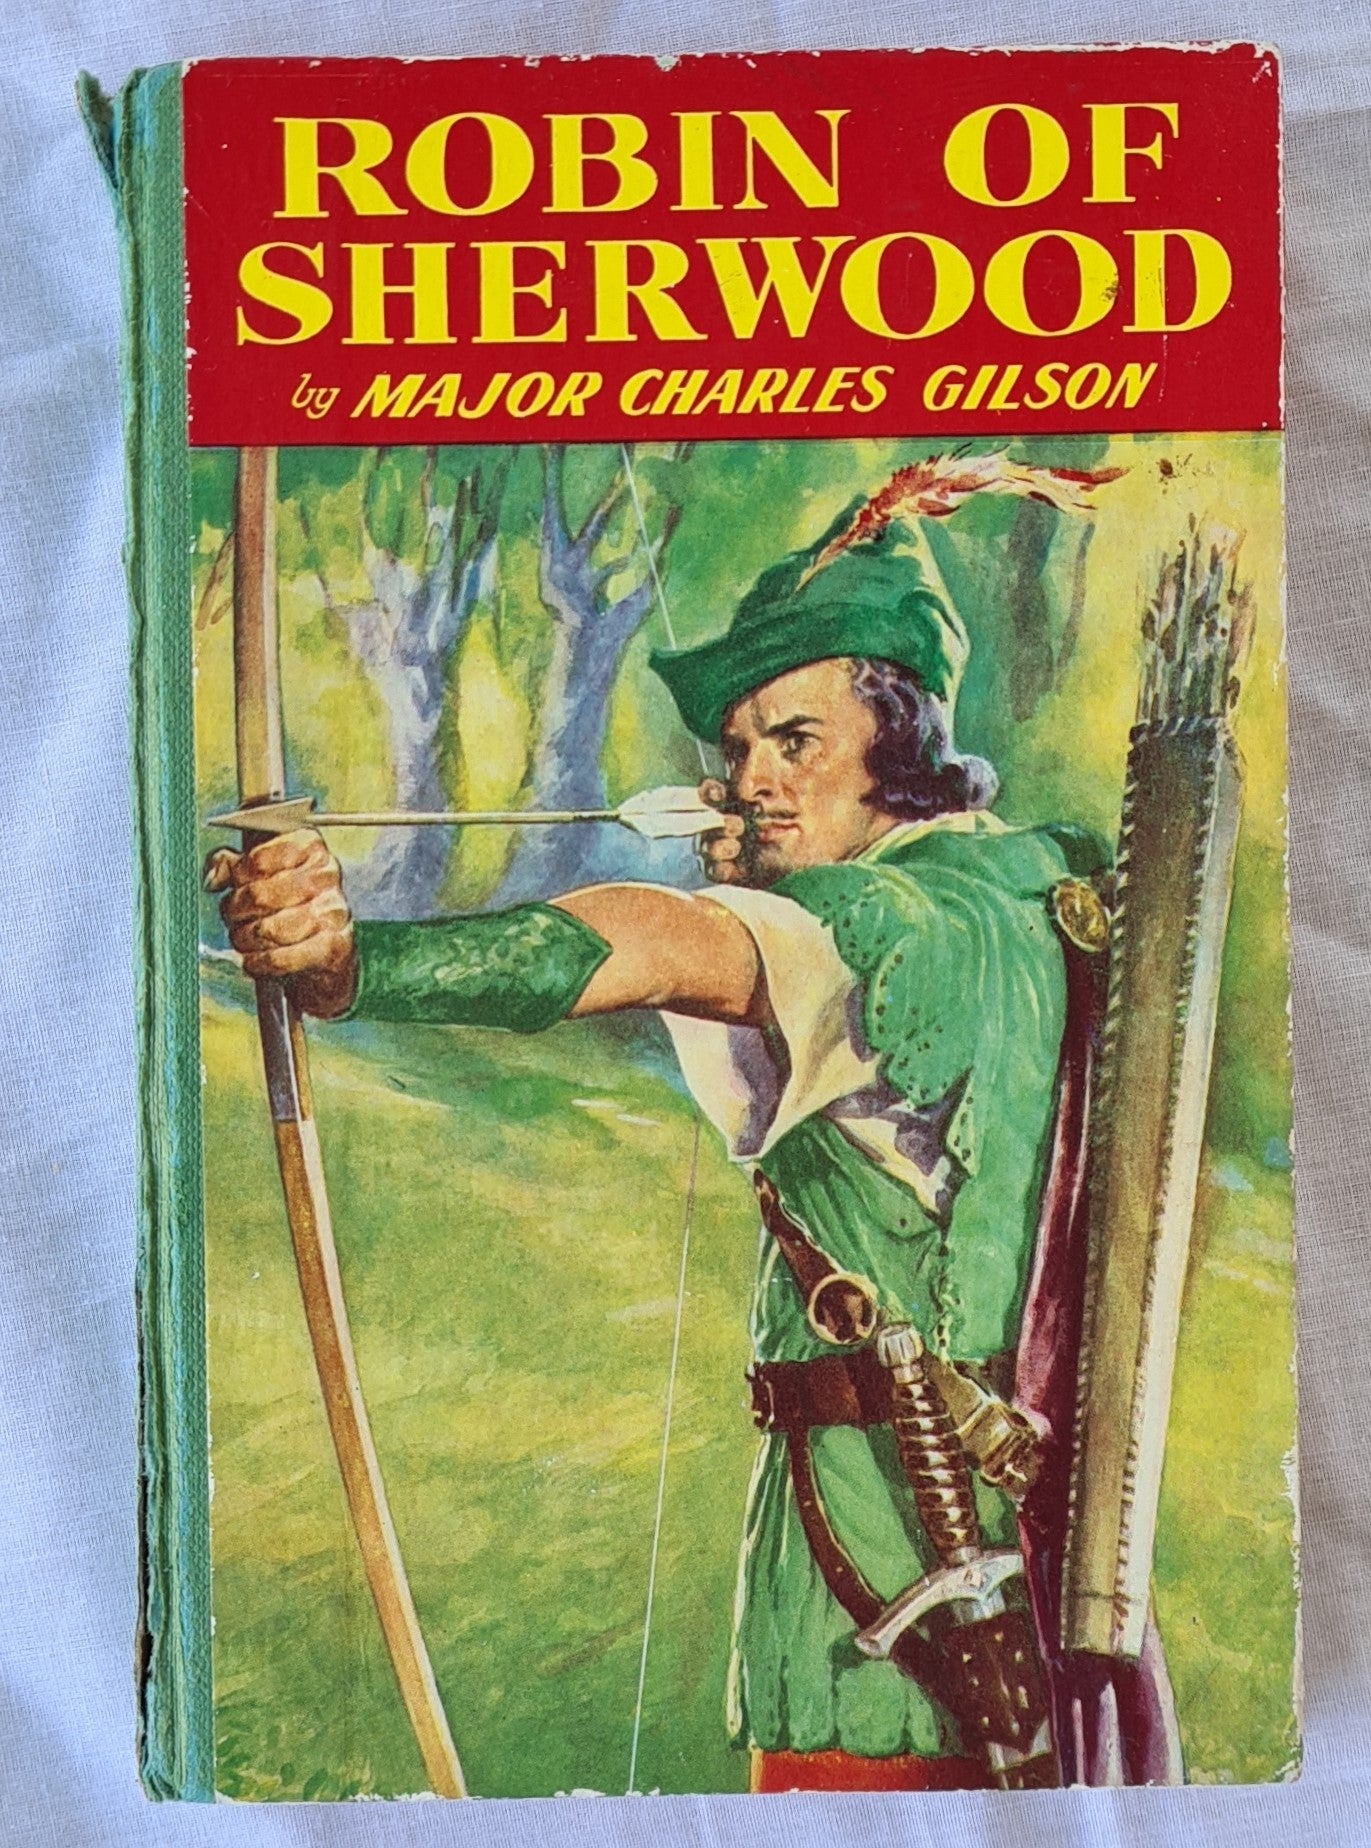 Robin of Sherwood by Major Charles Gilson